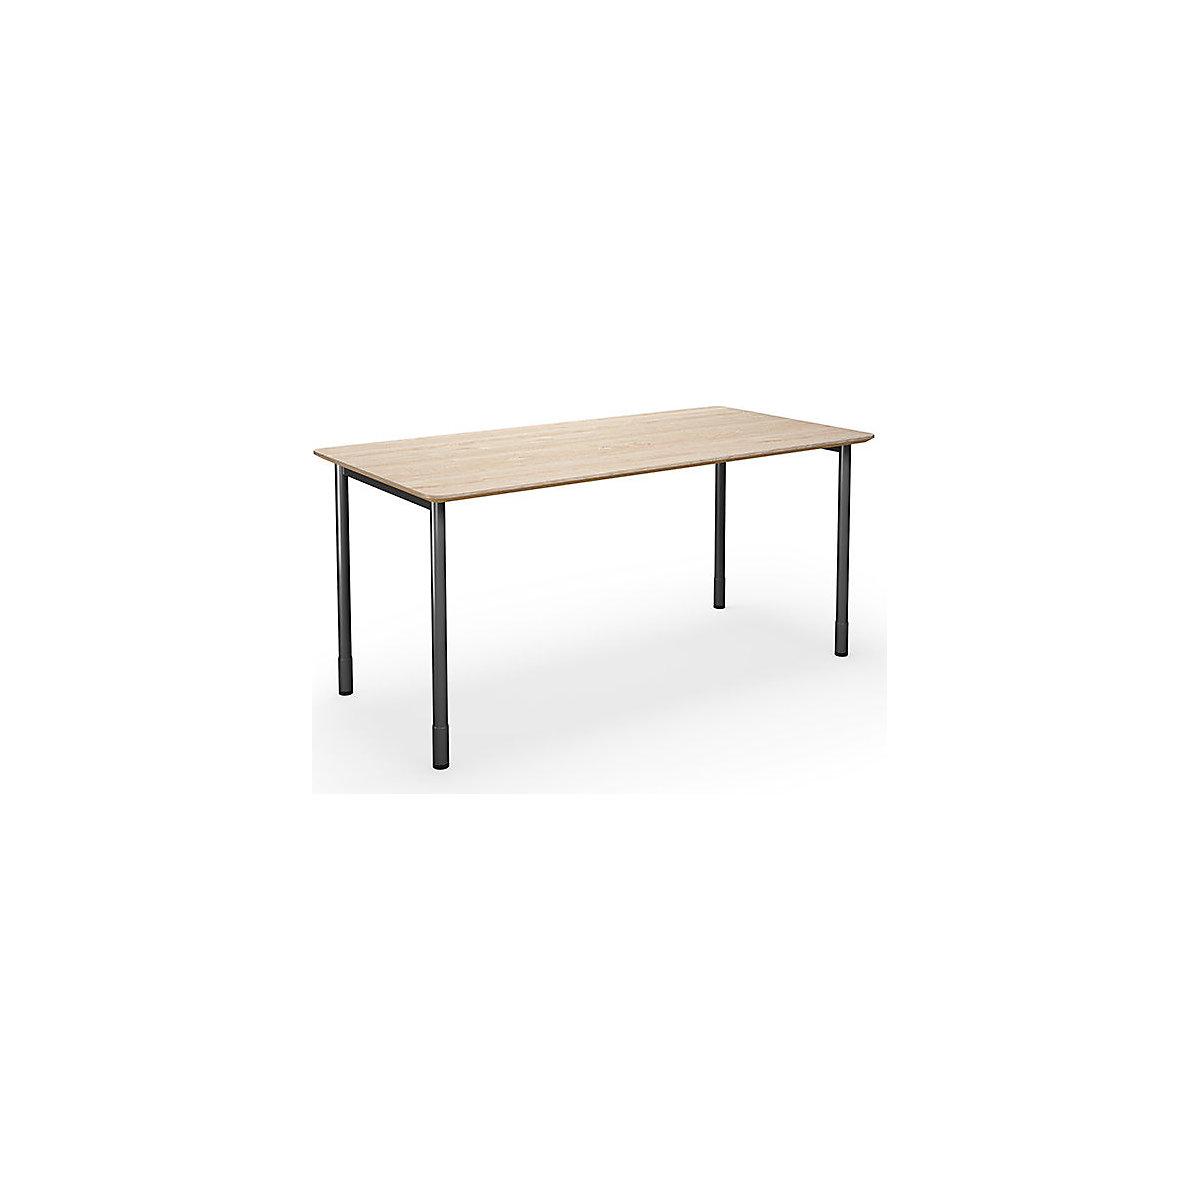 DUO-C Trend multi-purpose desk, straight tabletop, rounded corners, WxD 1600 x 800 mm, oak, black-3